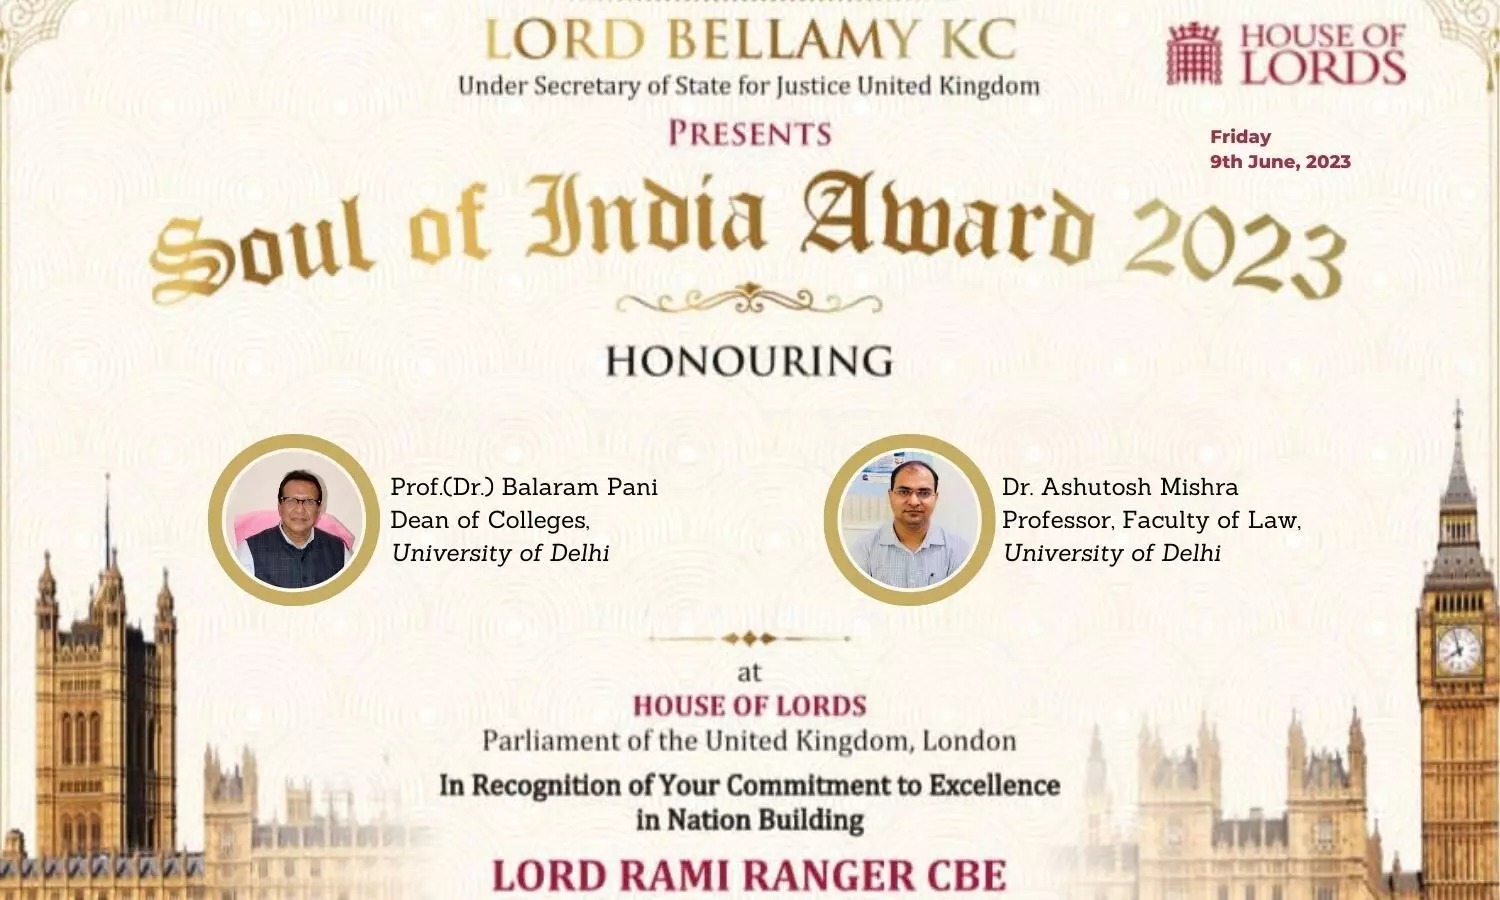 Prof Dr Balaram Pani and Dr Ashutosh Mishra honoured with Soul of India Award 2023 | House of Lords, UK